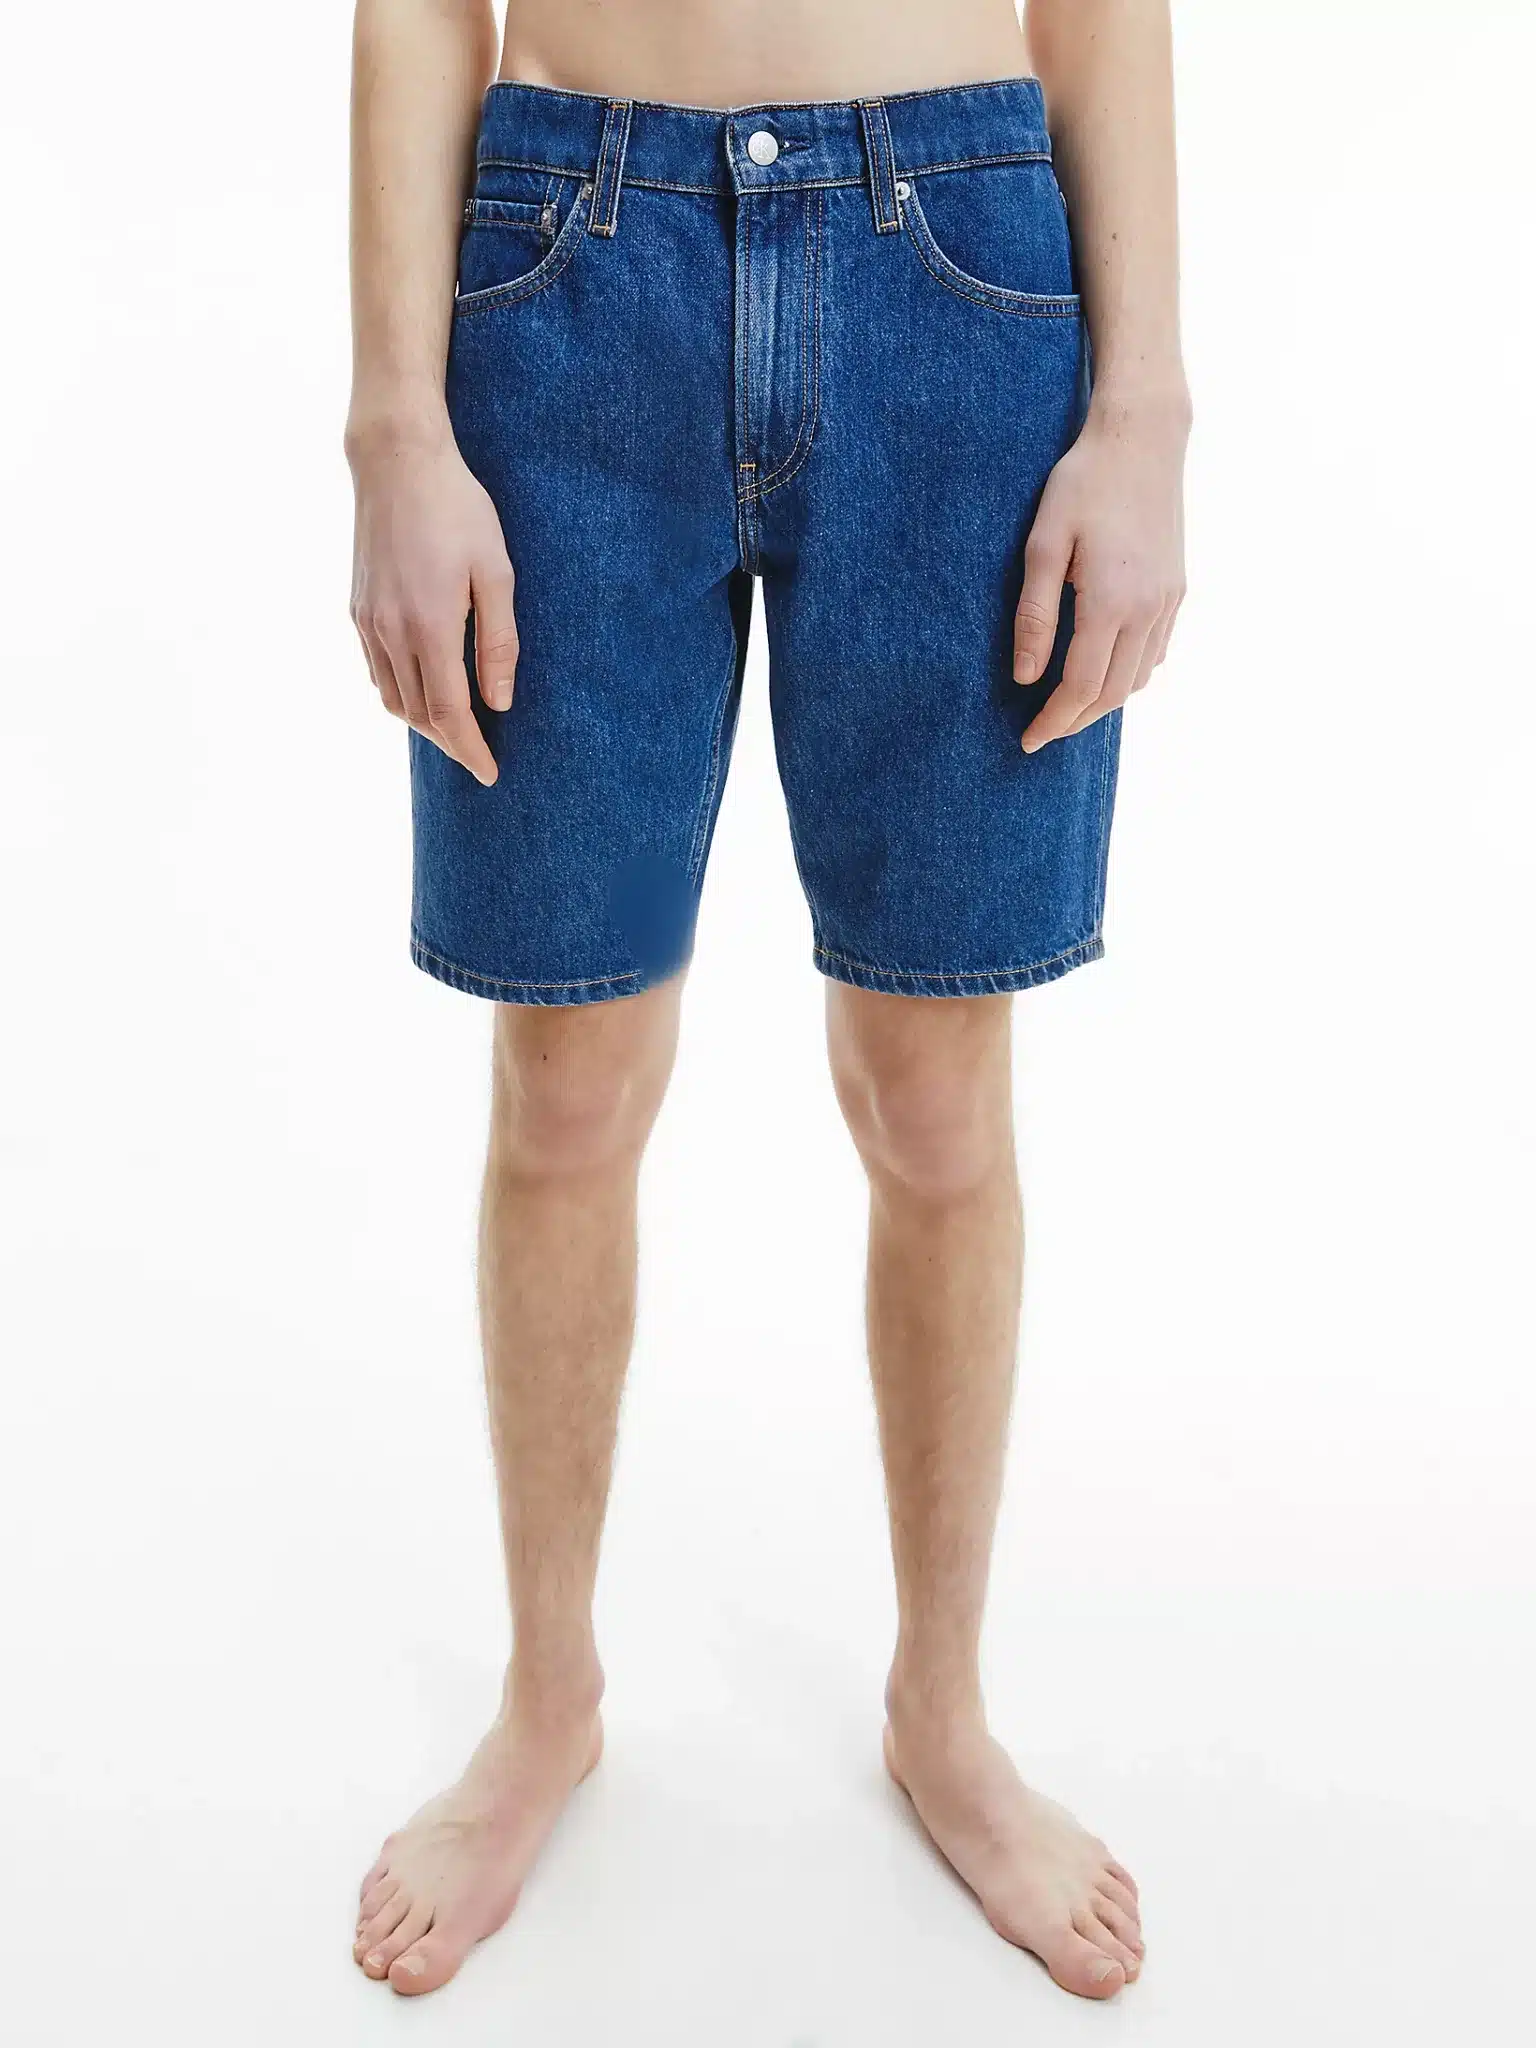 Buy Calvin Klein Denim Shorts Denim Medium - Scandinavian Fashion Store